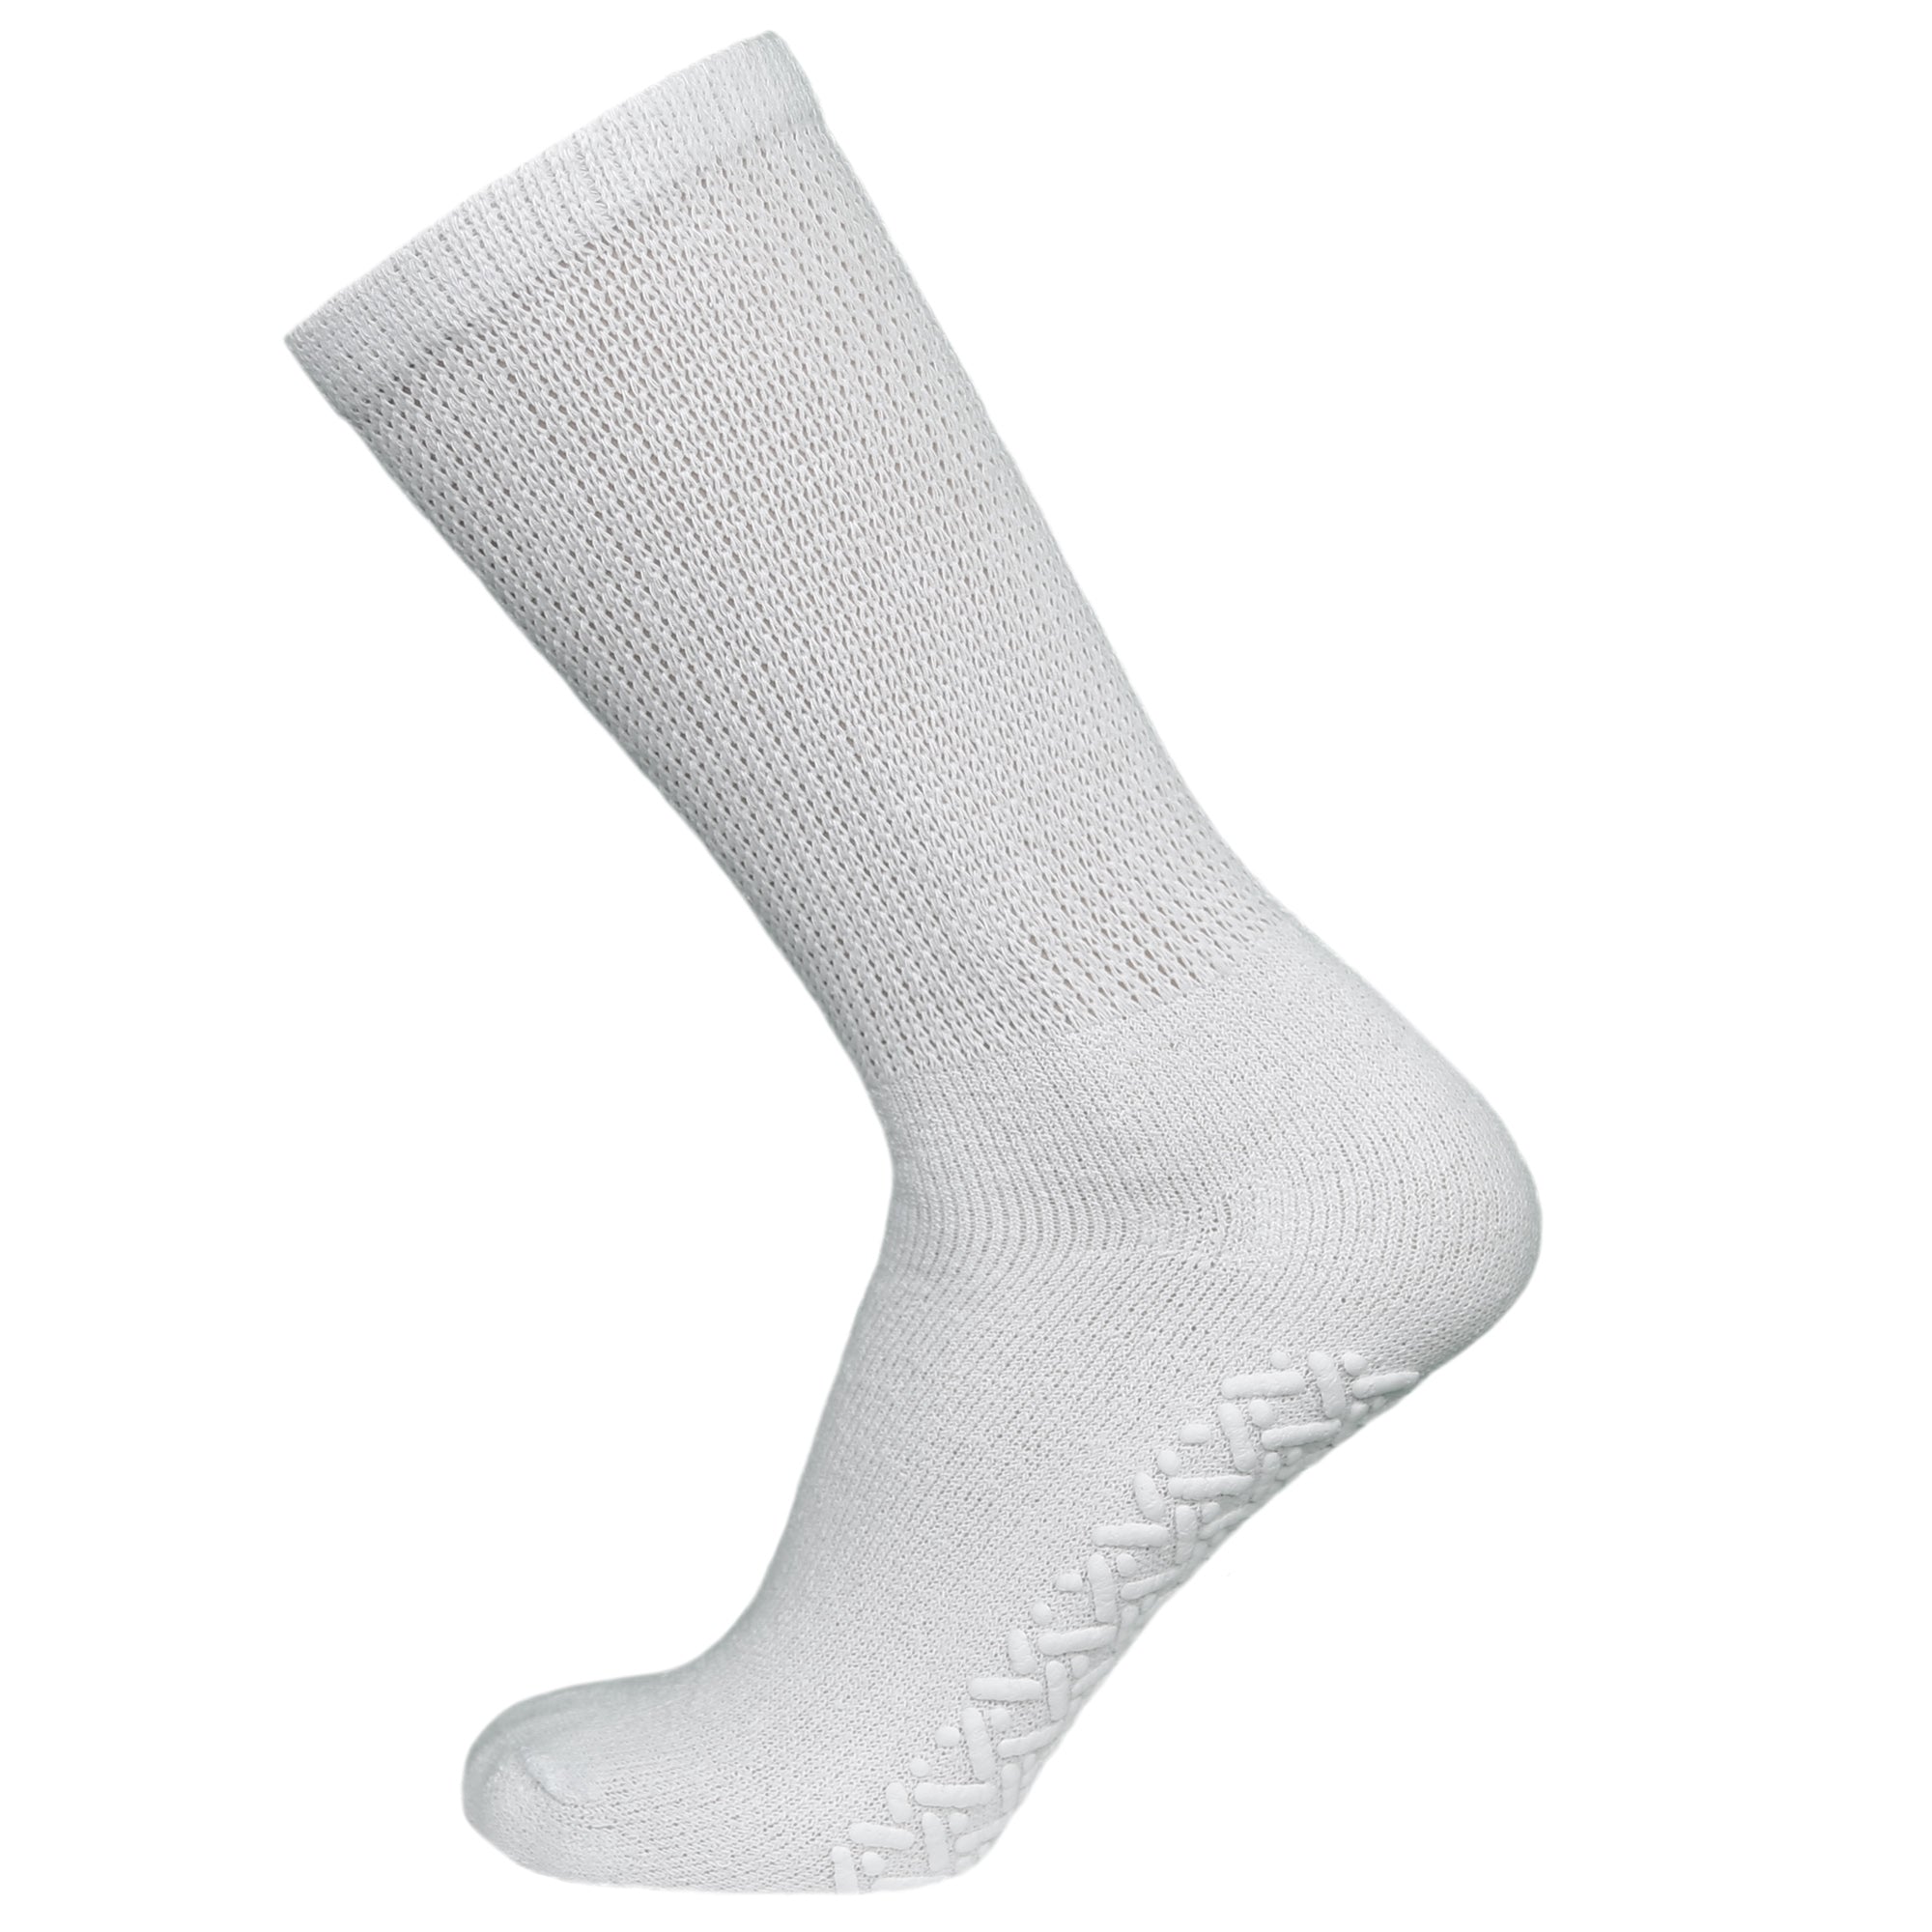 Men's Non-Skid Diabetic Cotton Crew Gripper Socks with Non Binding